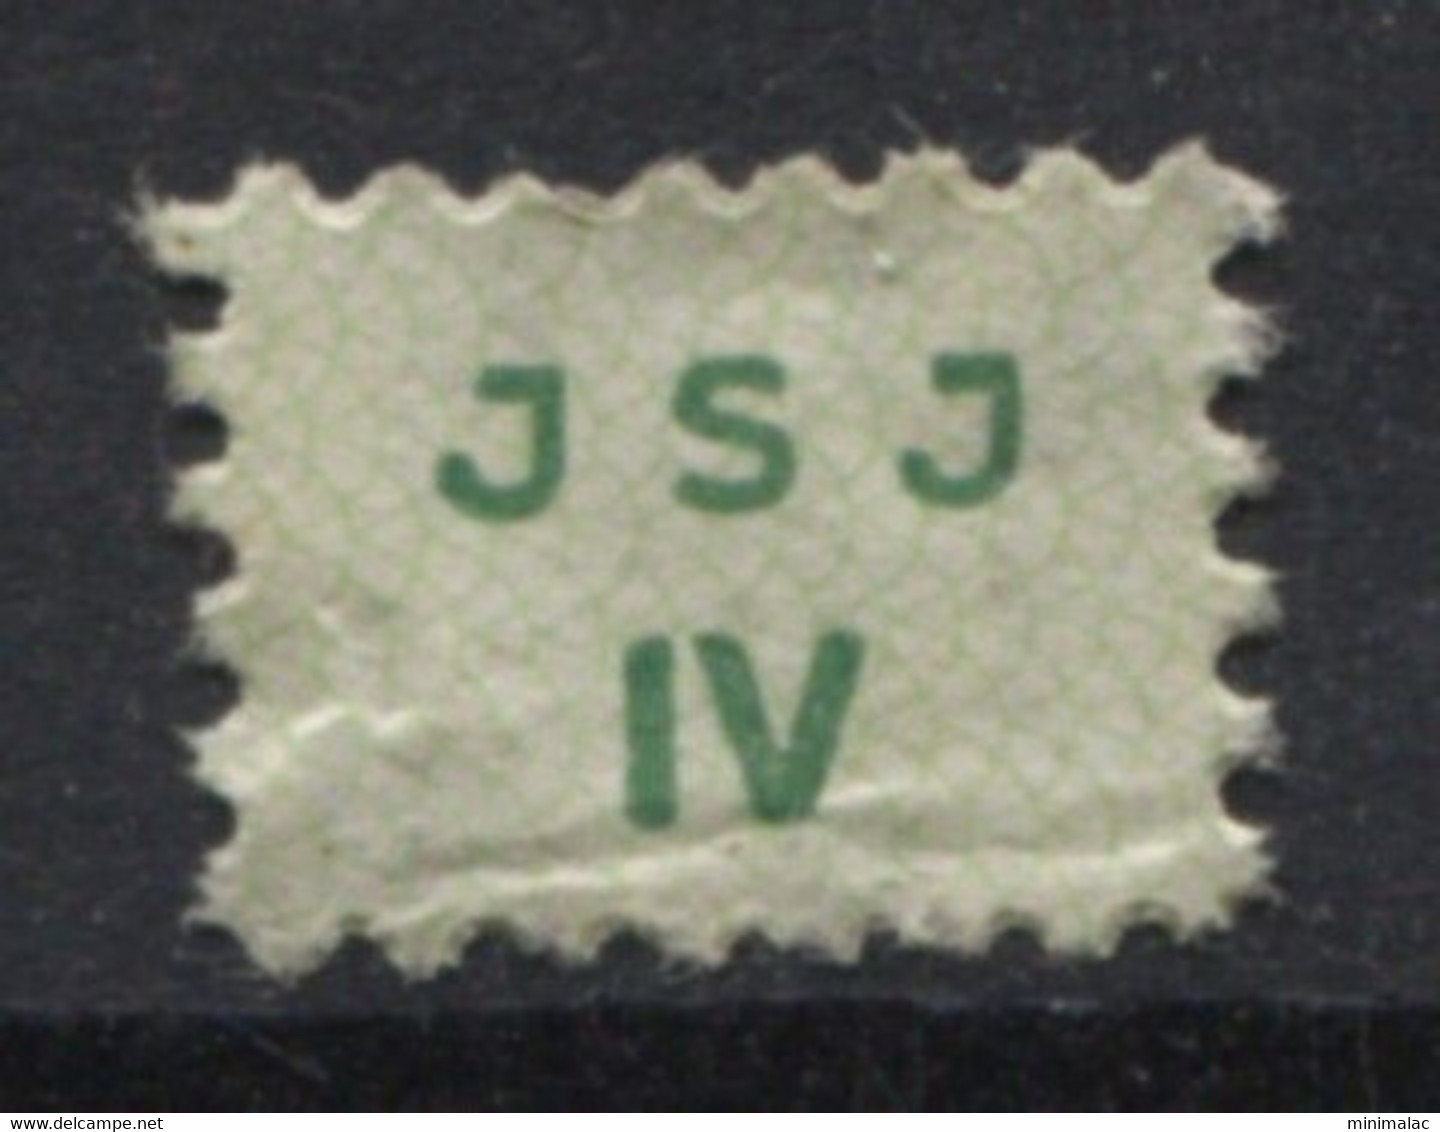 Yugoslavia 1948, Stamp For Membership, JSJ, Labor Union, Administrative Stamp - Revenue, Tax Stamp, IV - Officials